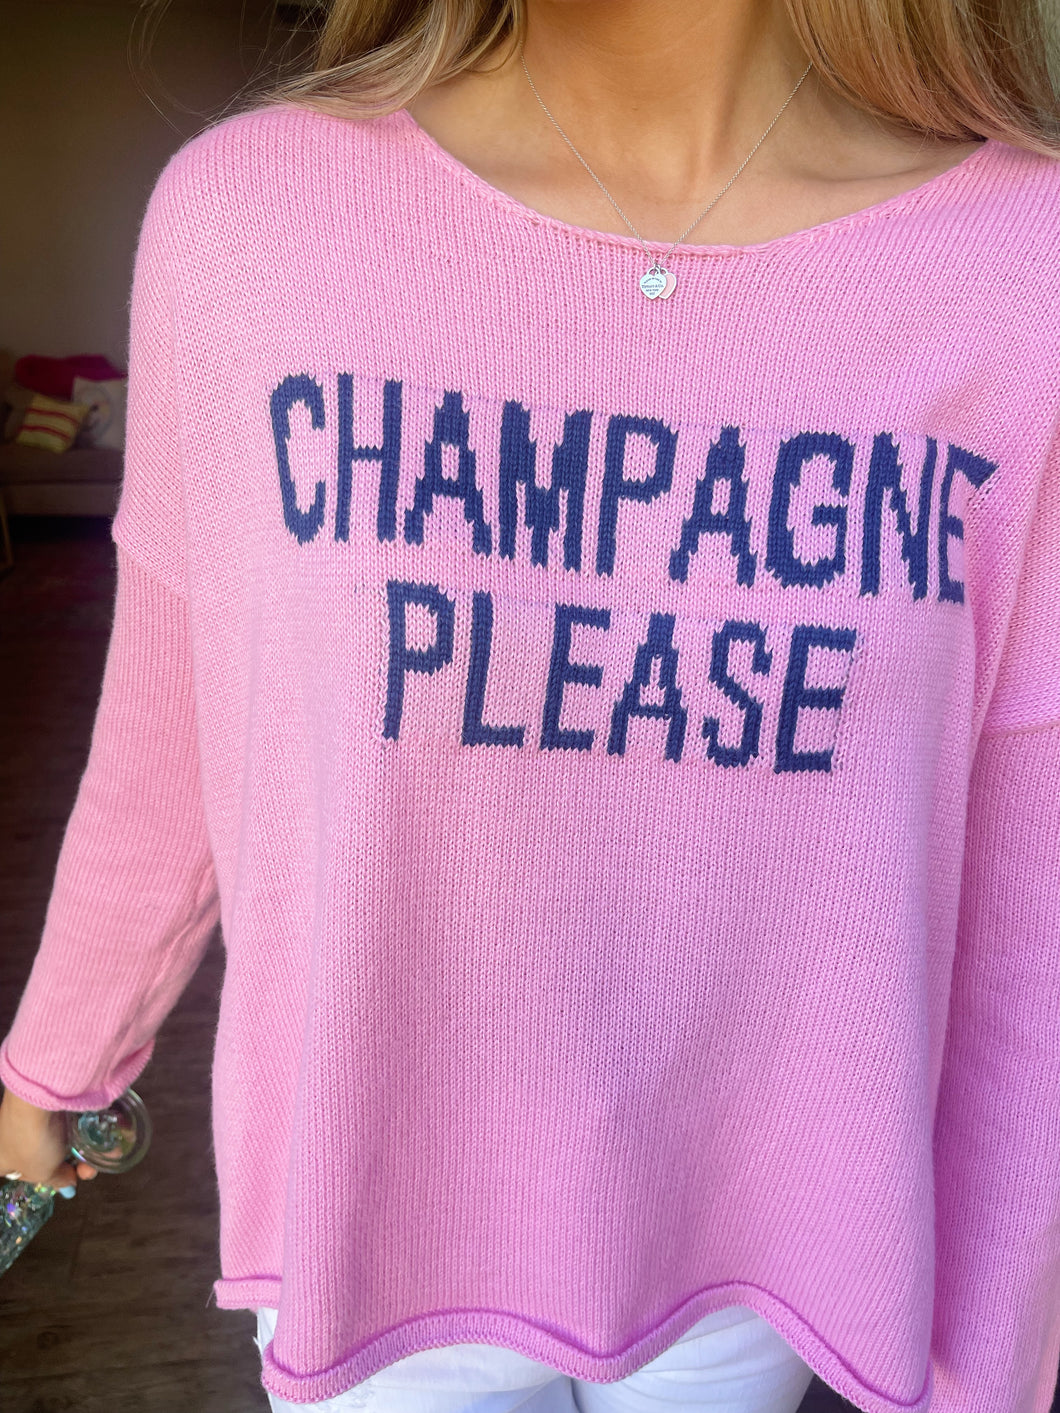 Champagne Sweater